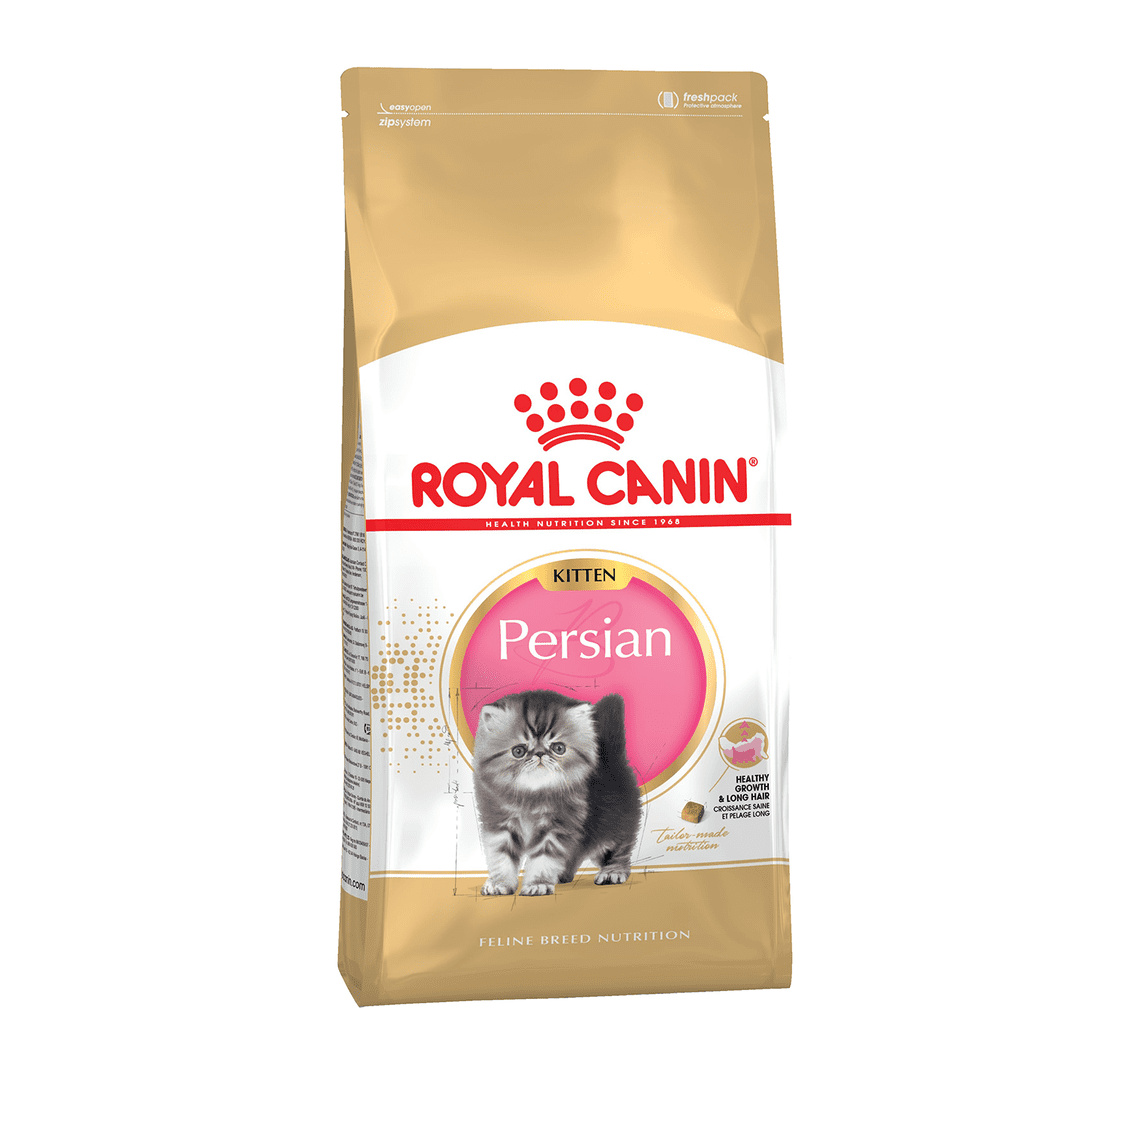 Royal Canin Корм Royal Canin для персидских котят 4-12 мес. (400 г) royal canin корм royal canin для персидских котят 4 12 мес 400 г